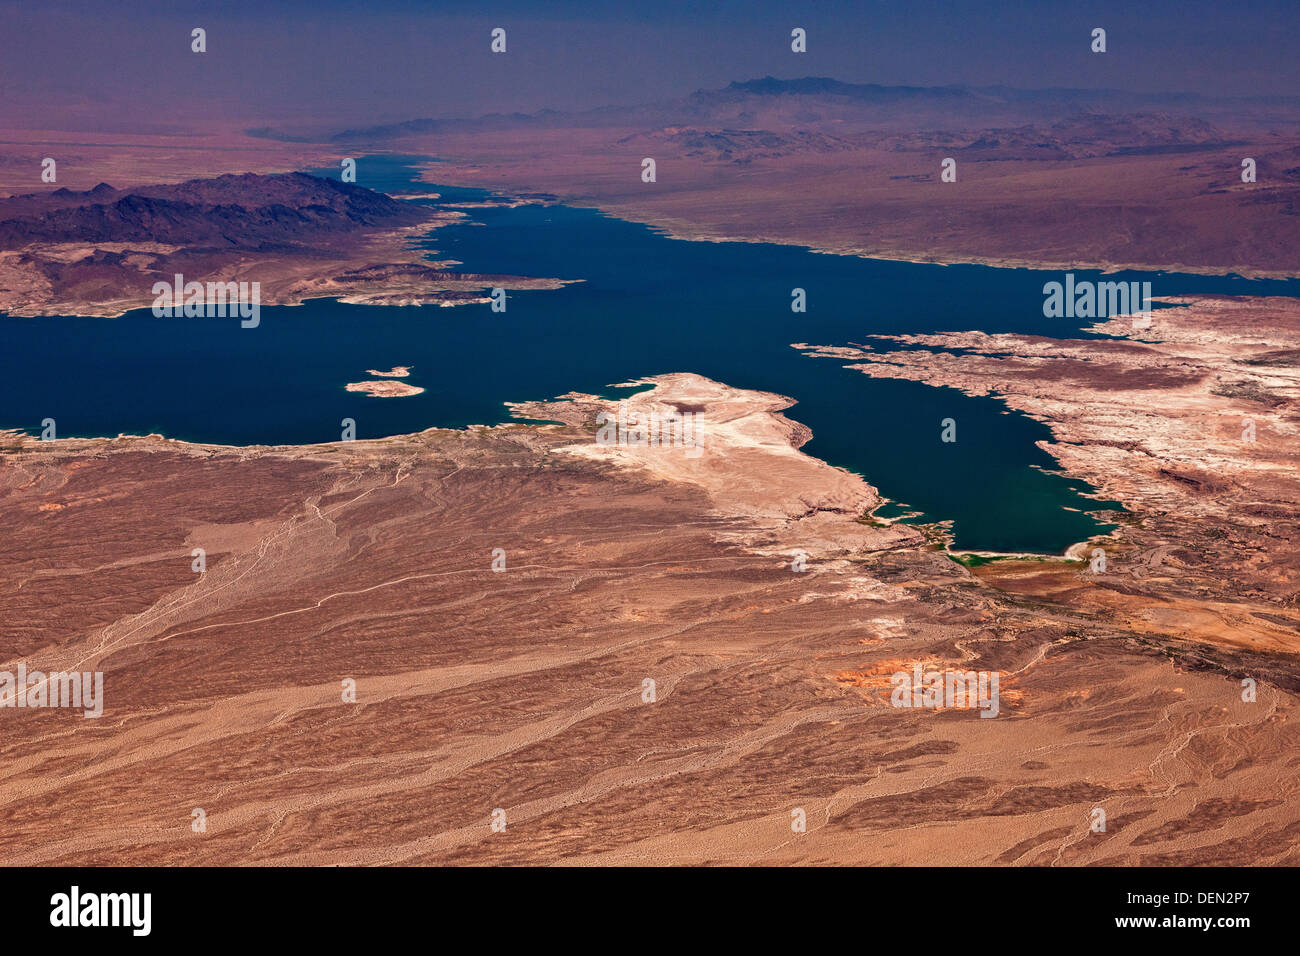 Il lago Mead Nevada e Arizona USA dall'aria. JMH5491 Foto Stock